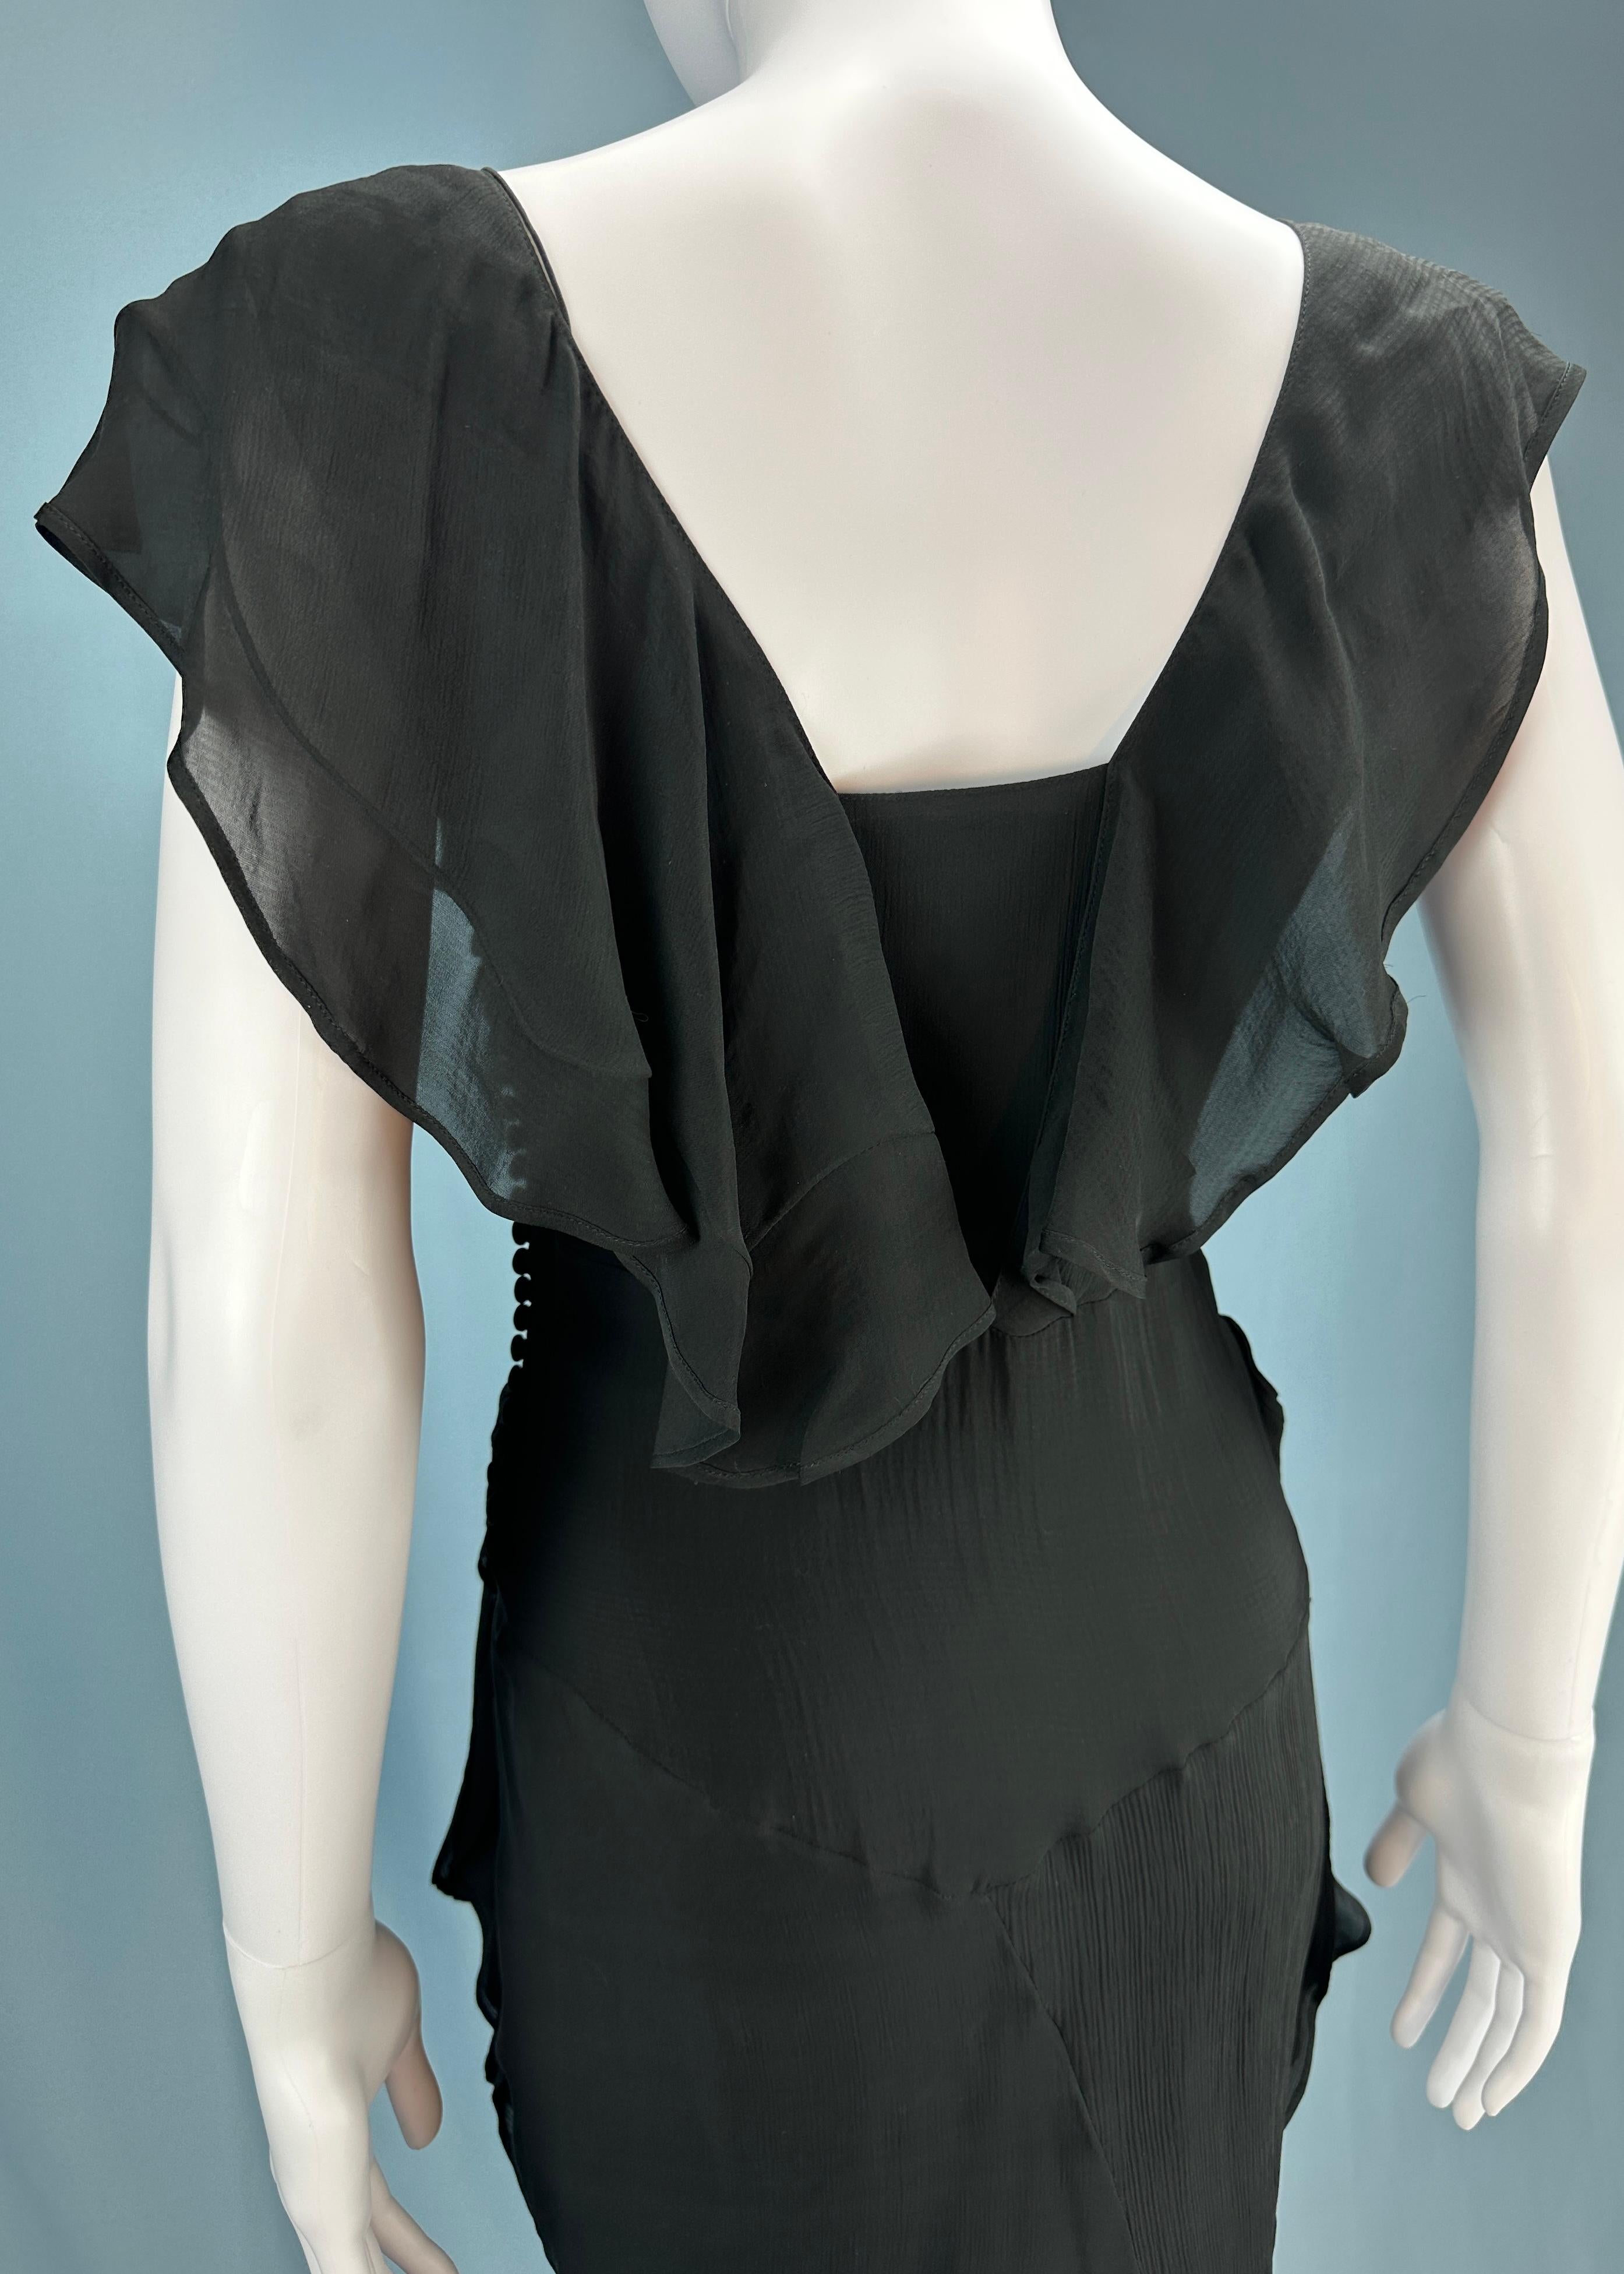 Dior Fall 2006 Black Silk Chiffon Ruffle Dress For Sale 1